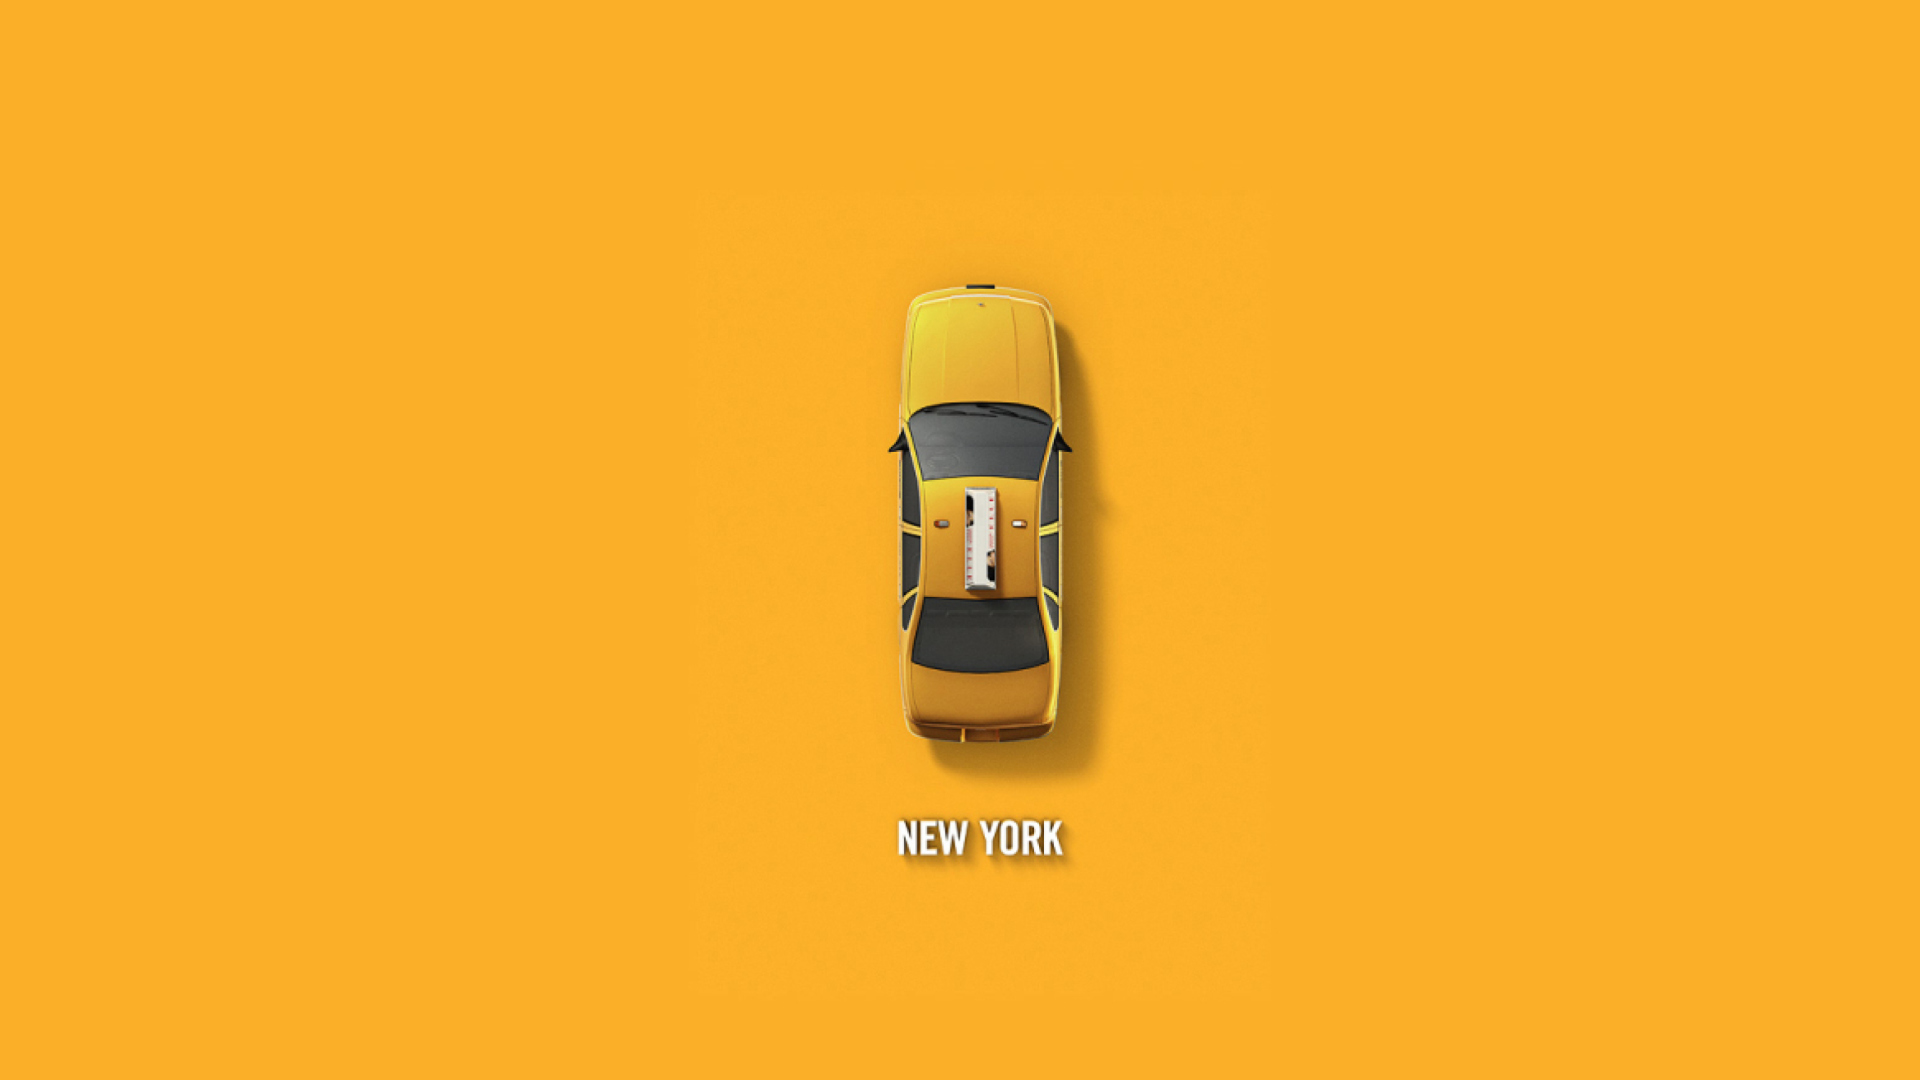 New York Cab wallpaper 1920x1080